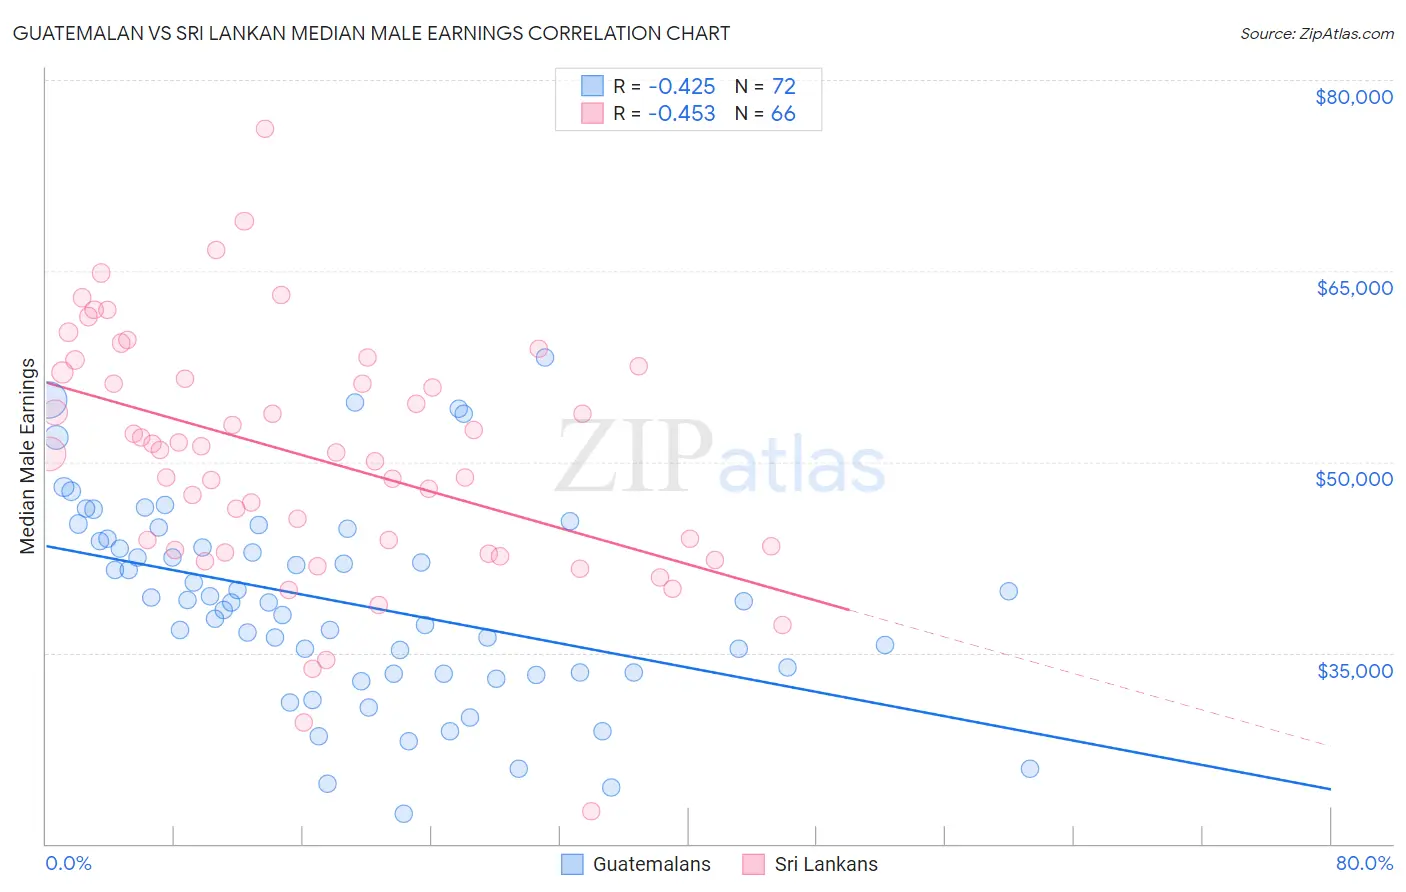 Guatemalan vs Sri Lankan Median Male Earnings